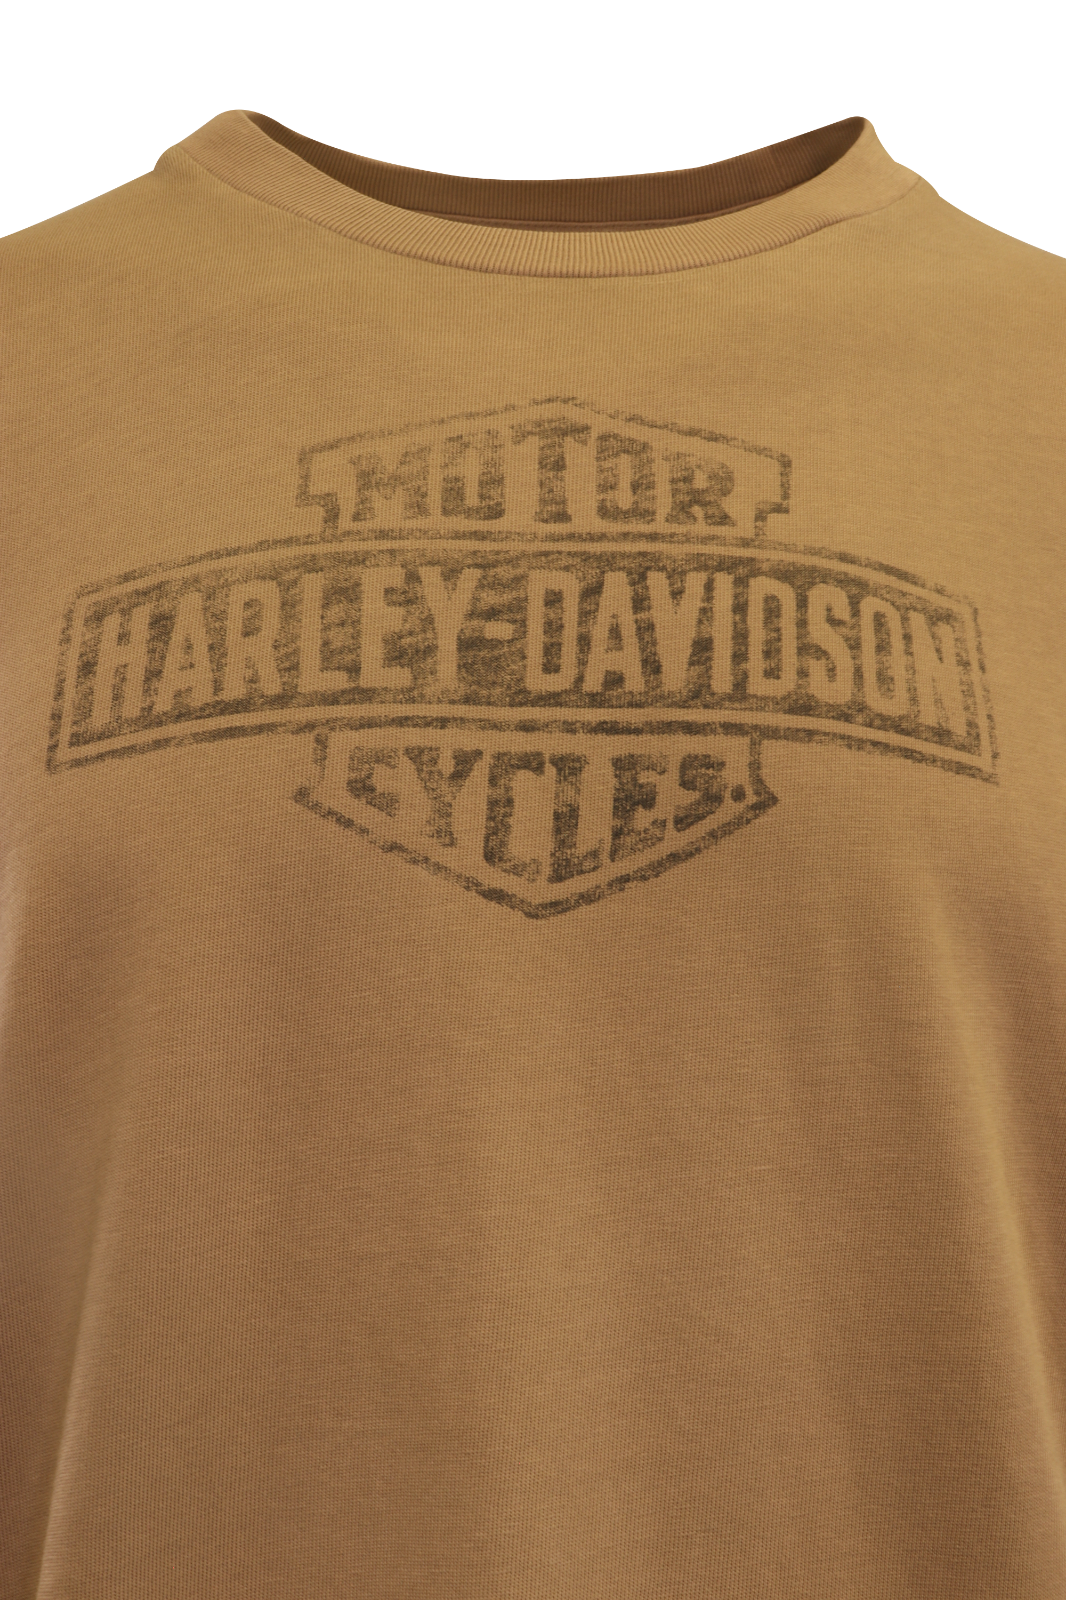 Harley-Davidson Men's T-Shirt Tan Distressed Logo Shoulder Stitch S/S (S96)